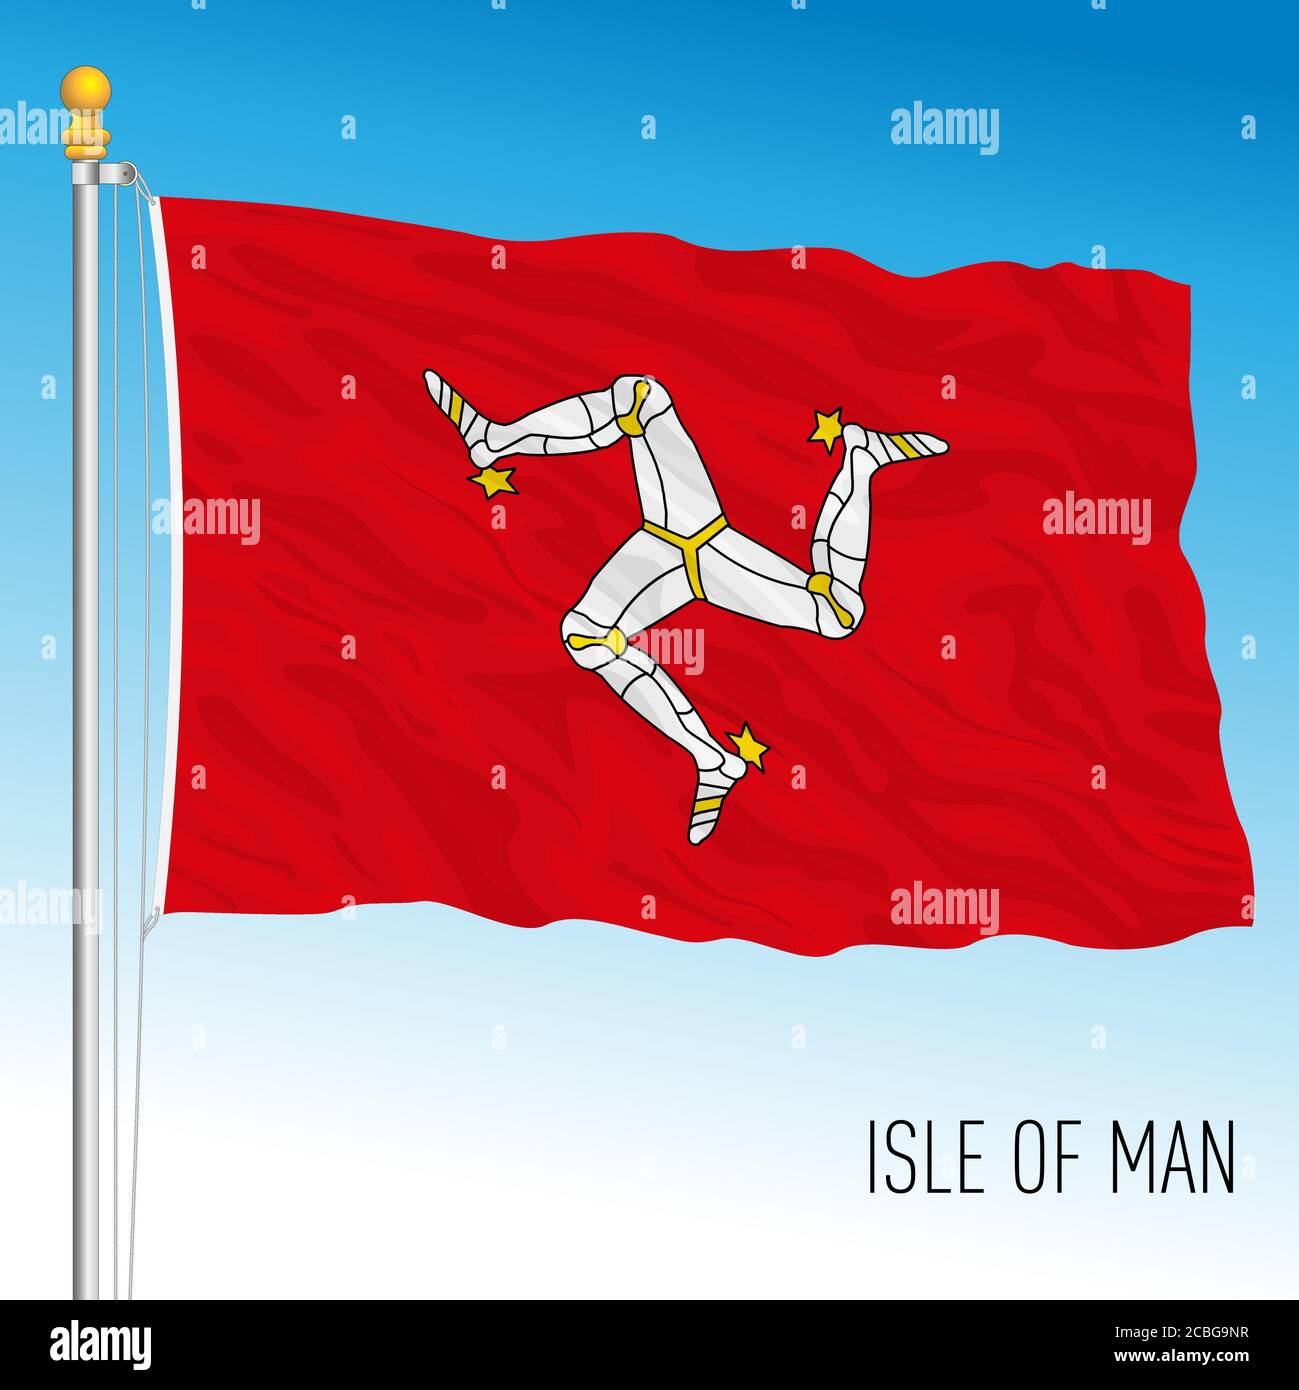 Isle of man offizielle Nationalflagge, britisches Territorium, Vektorgrafik Stock Vektor